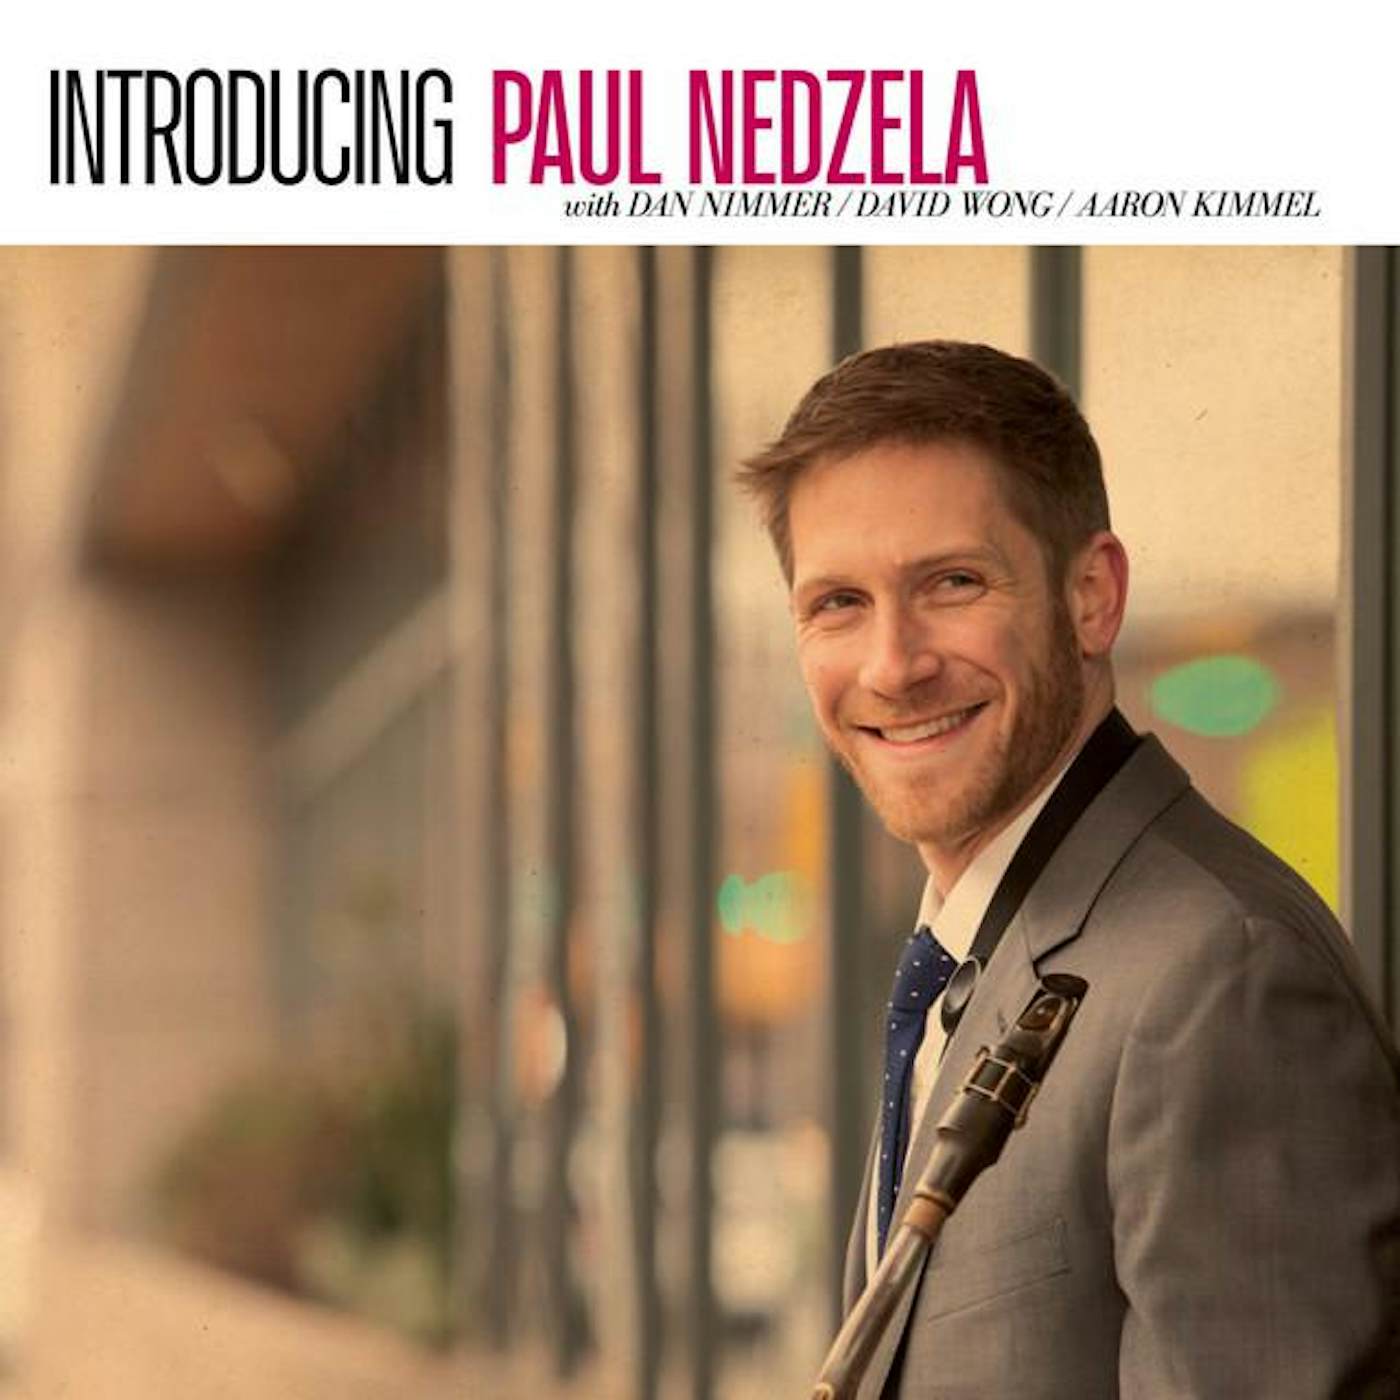 Paul Nedzela